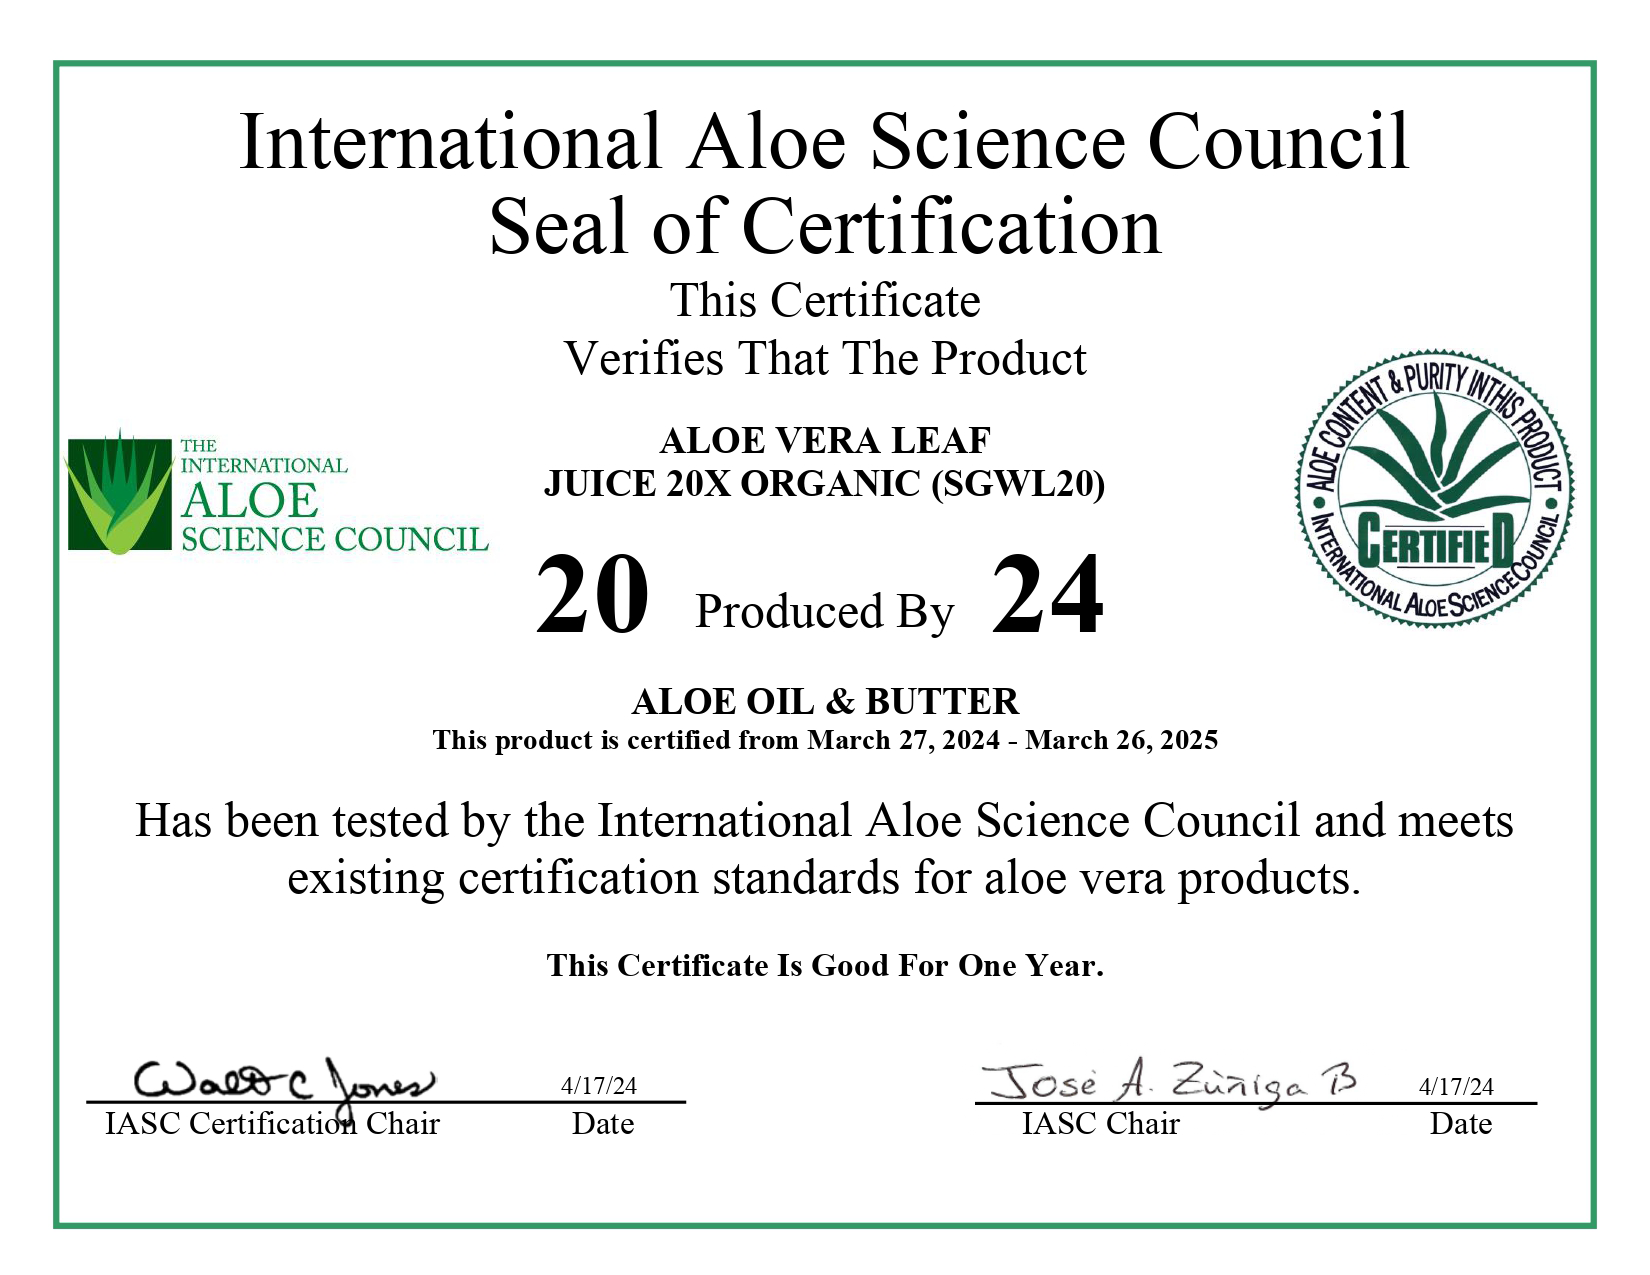 International Aloe Science Council Certification for Aloe Vera Leaf Juice 20X (SGWL20)